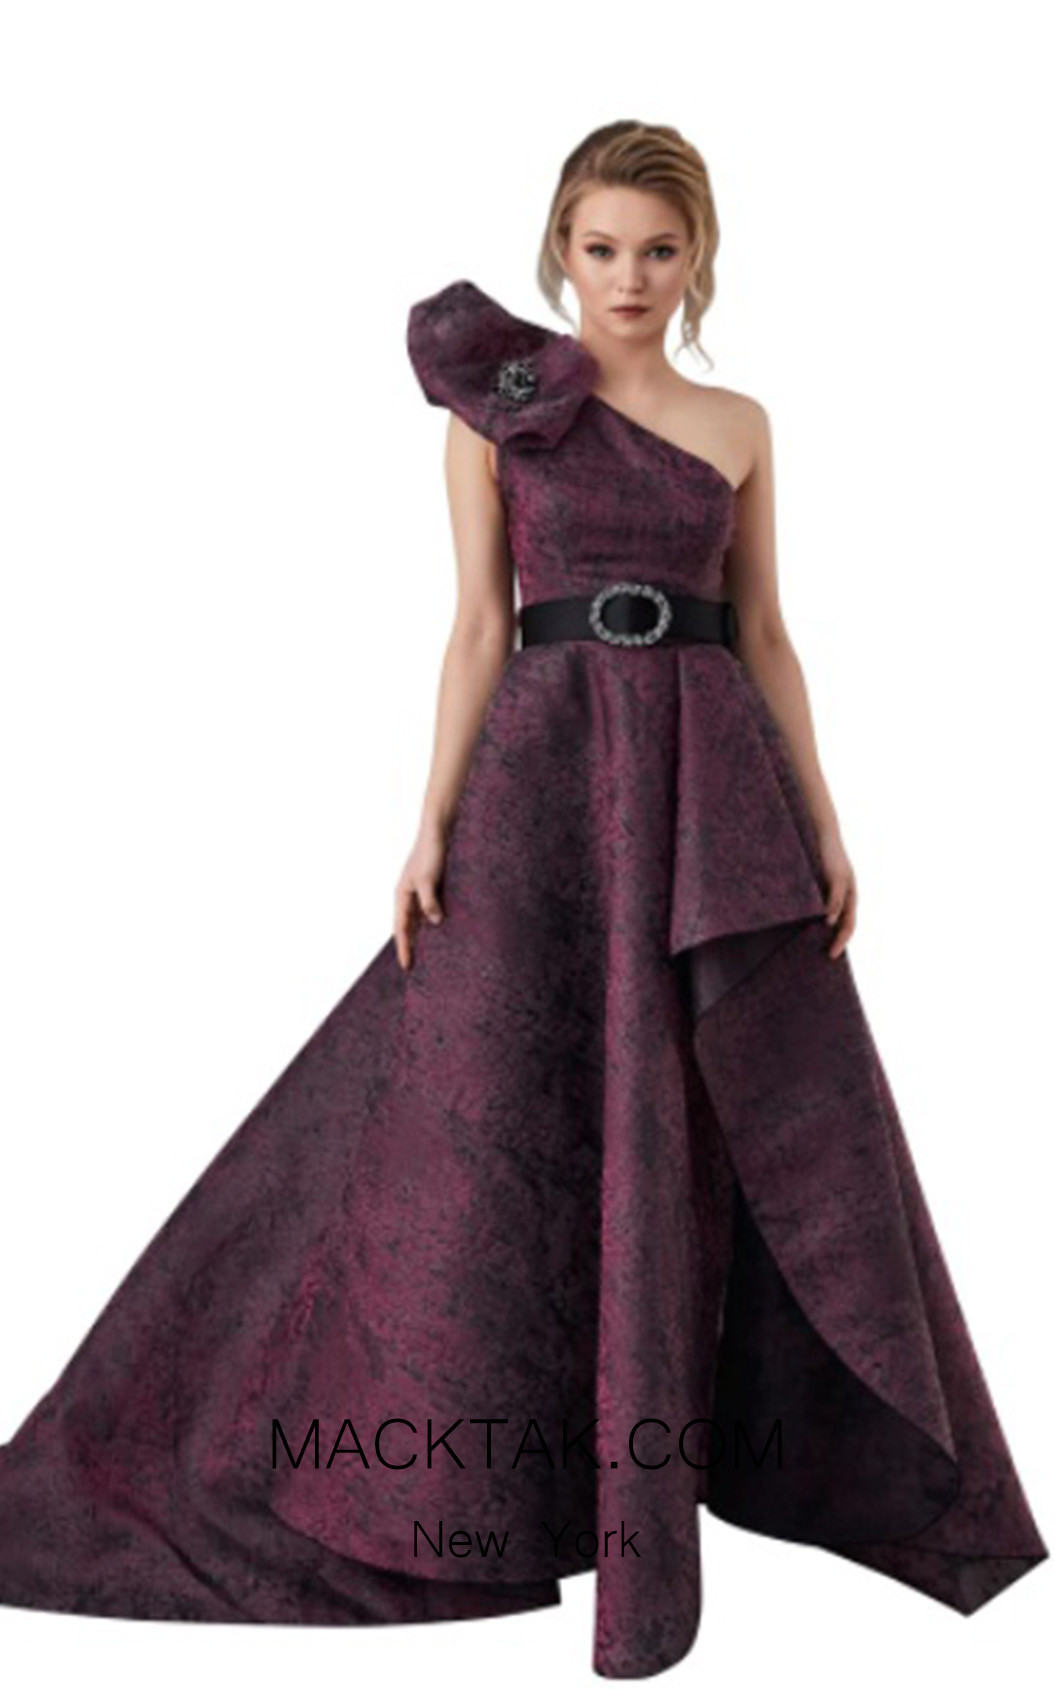 MackTak Couture 5097 Dress